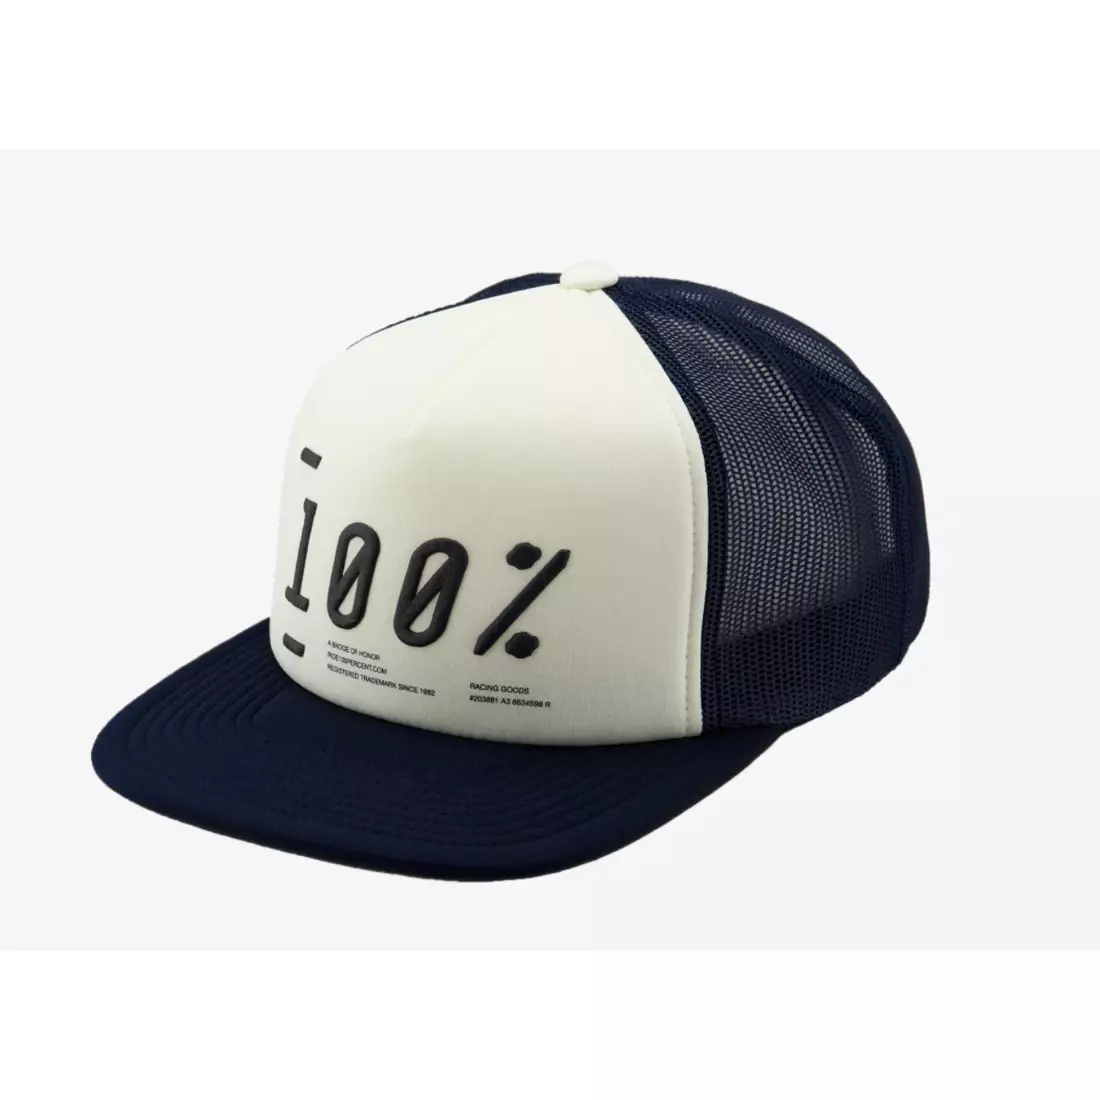 100% baseball cap TRANSFER navy blue and lime